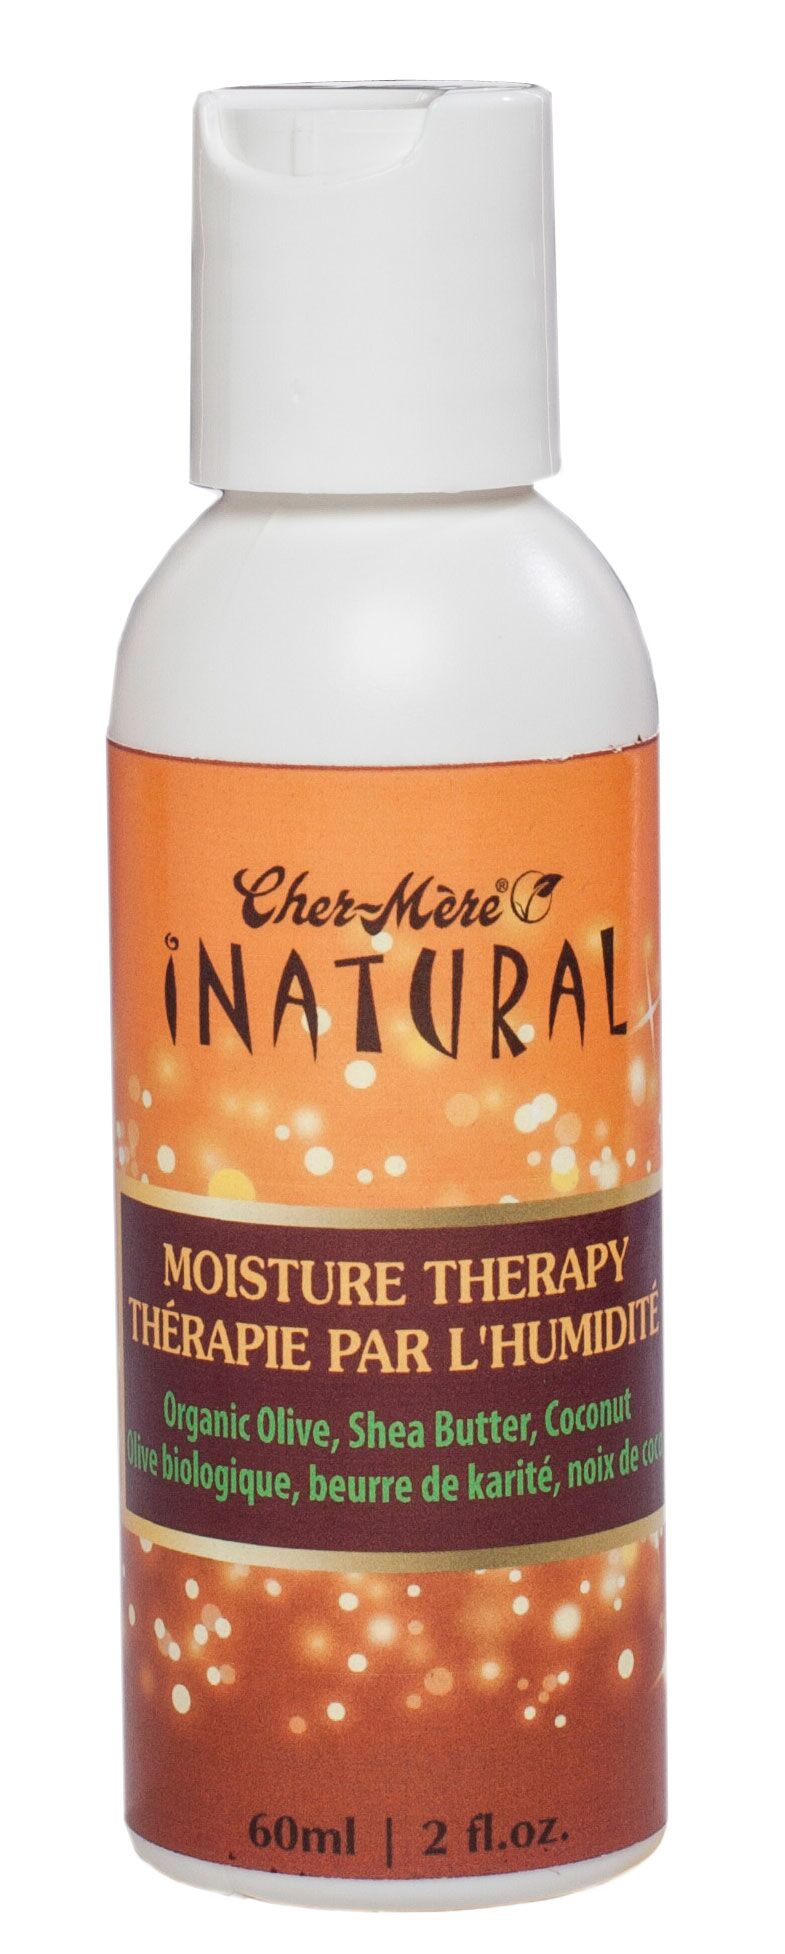 INATURAL Moisture Therapy (2oz) - Cher-Mere